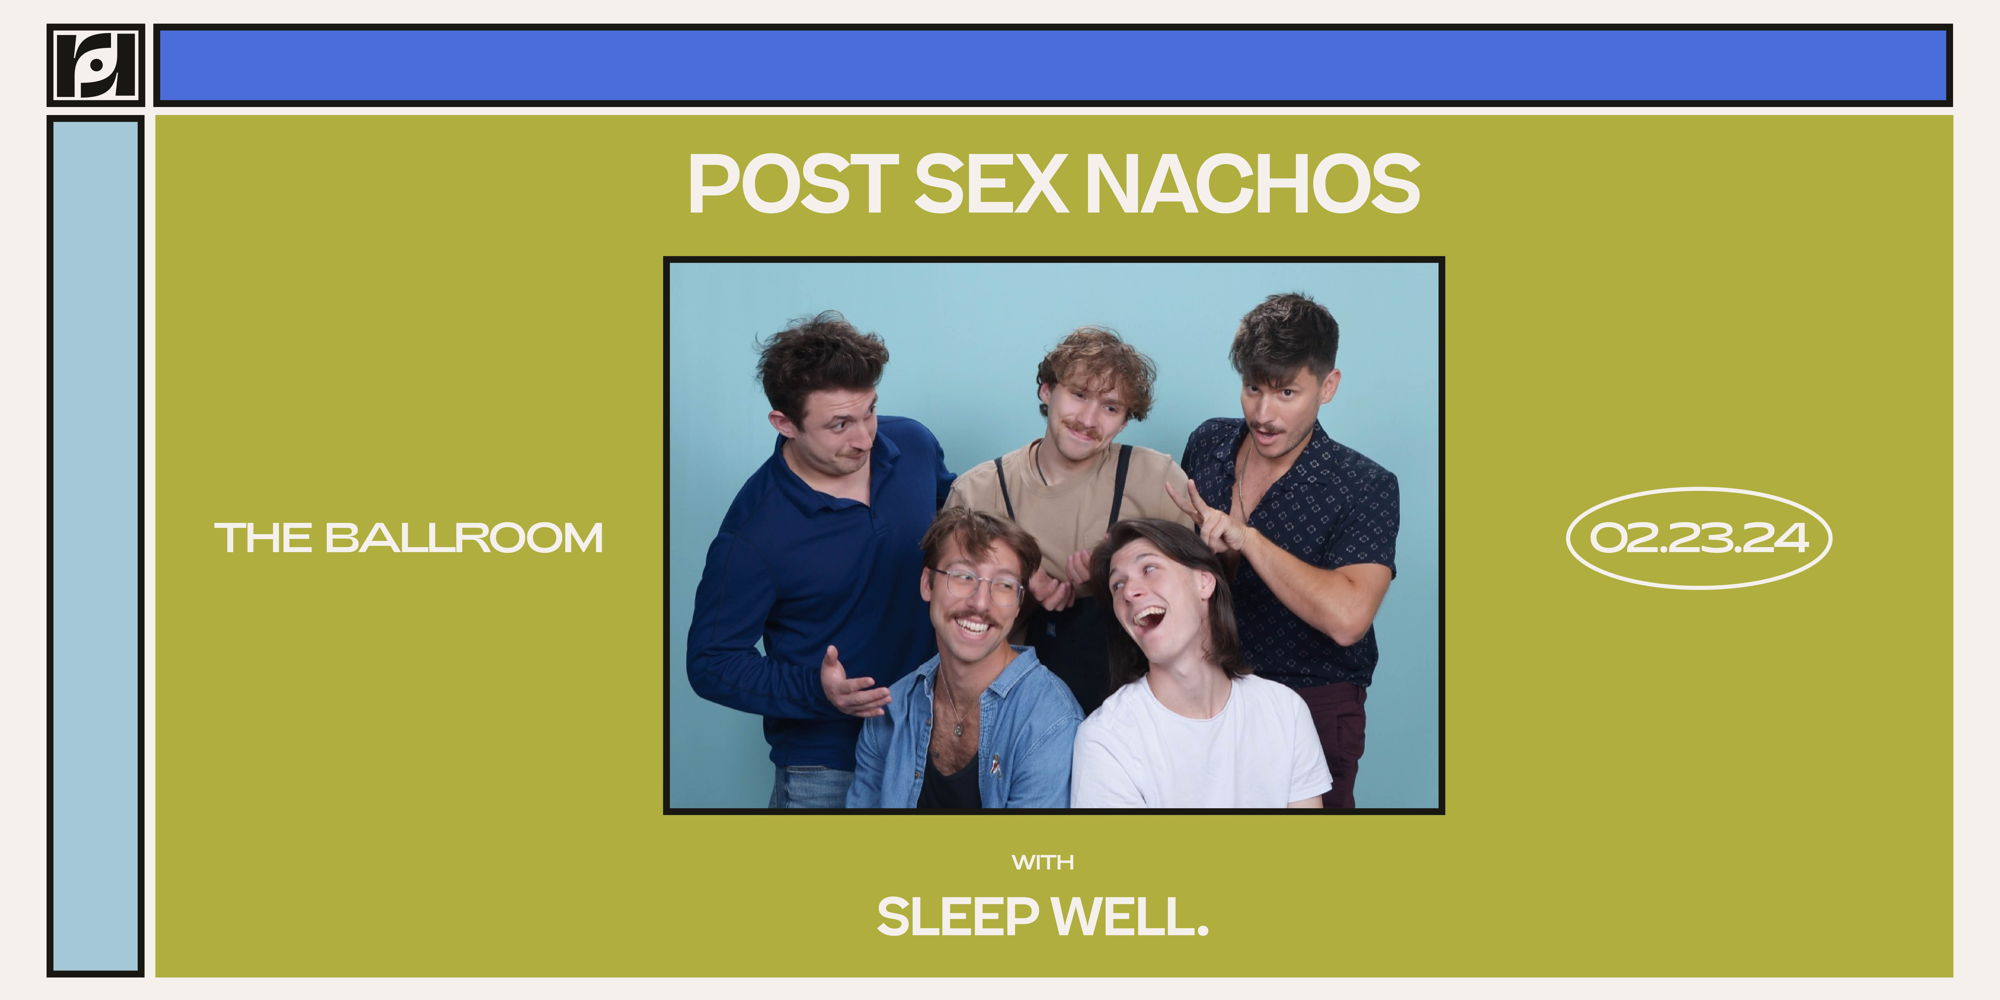 Resound Presents: Post Sex Nachos w/ sleep well. at The Ballroom promotional image